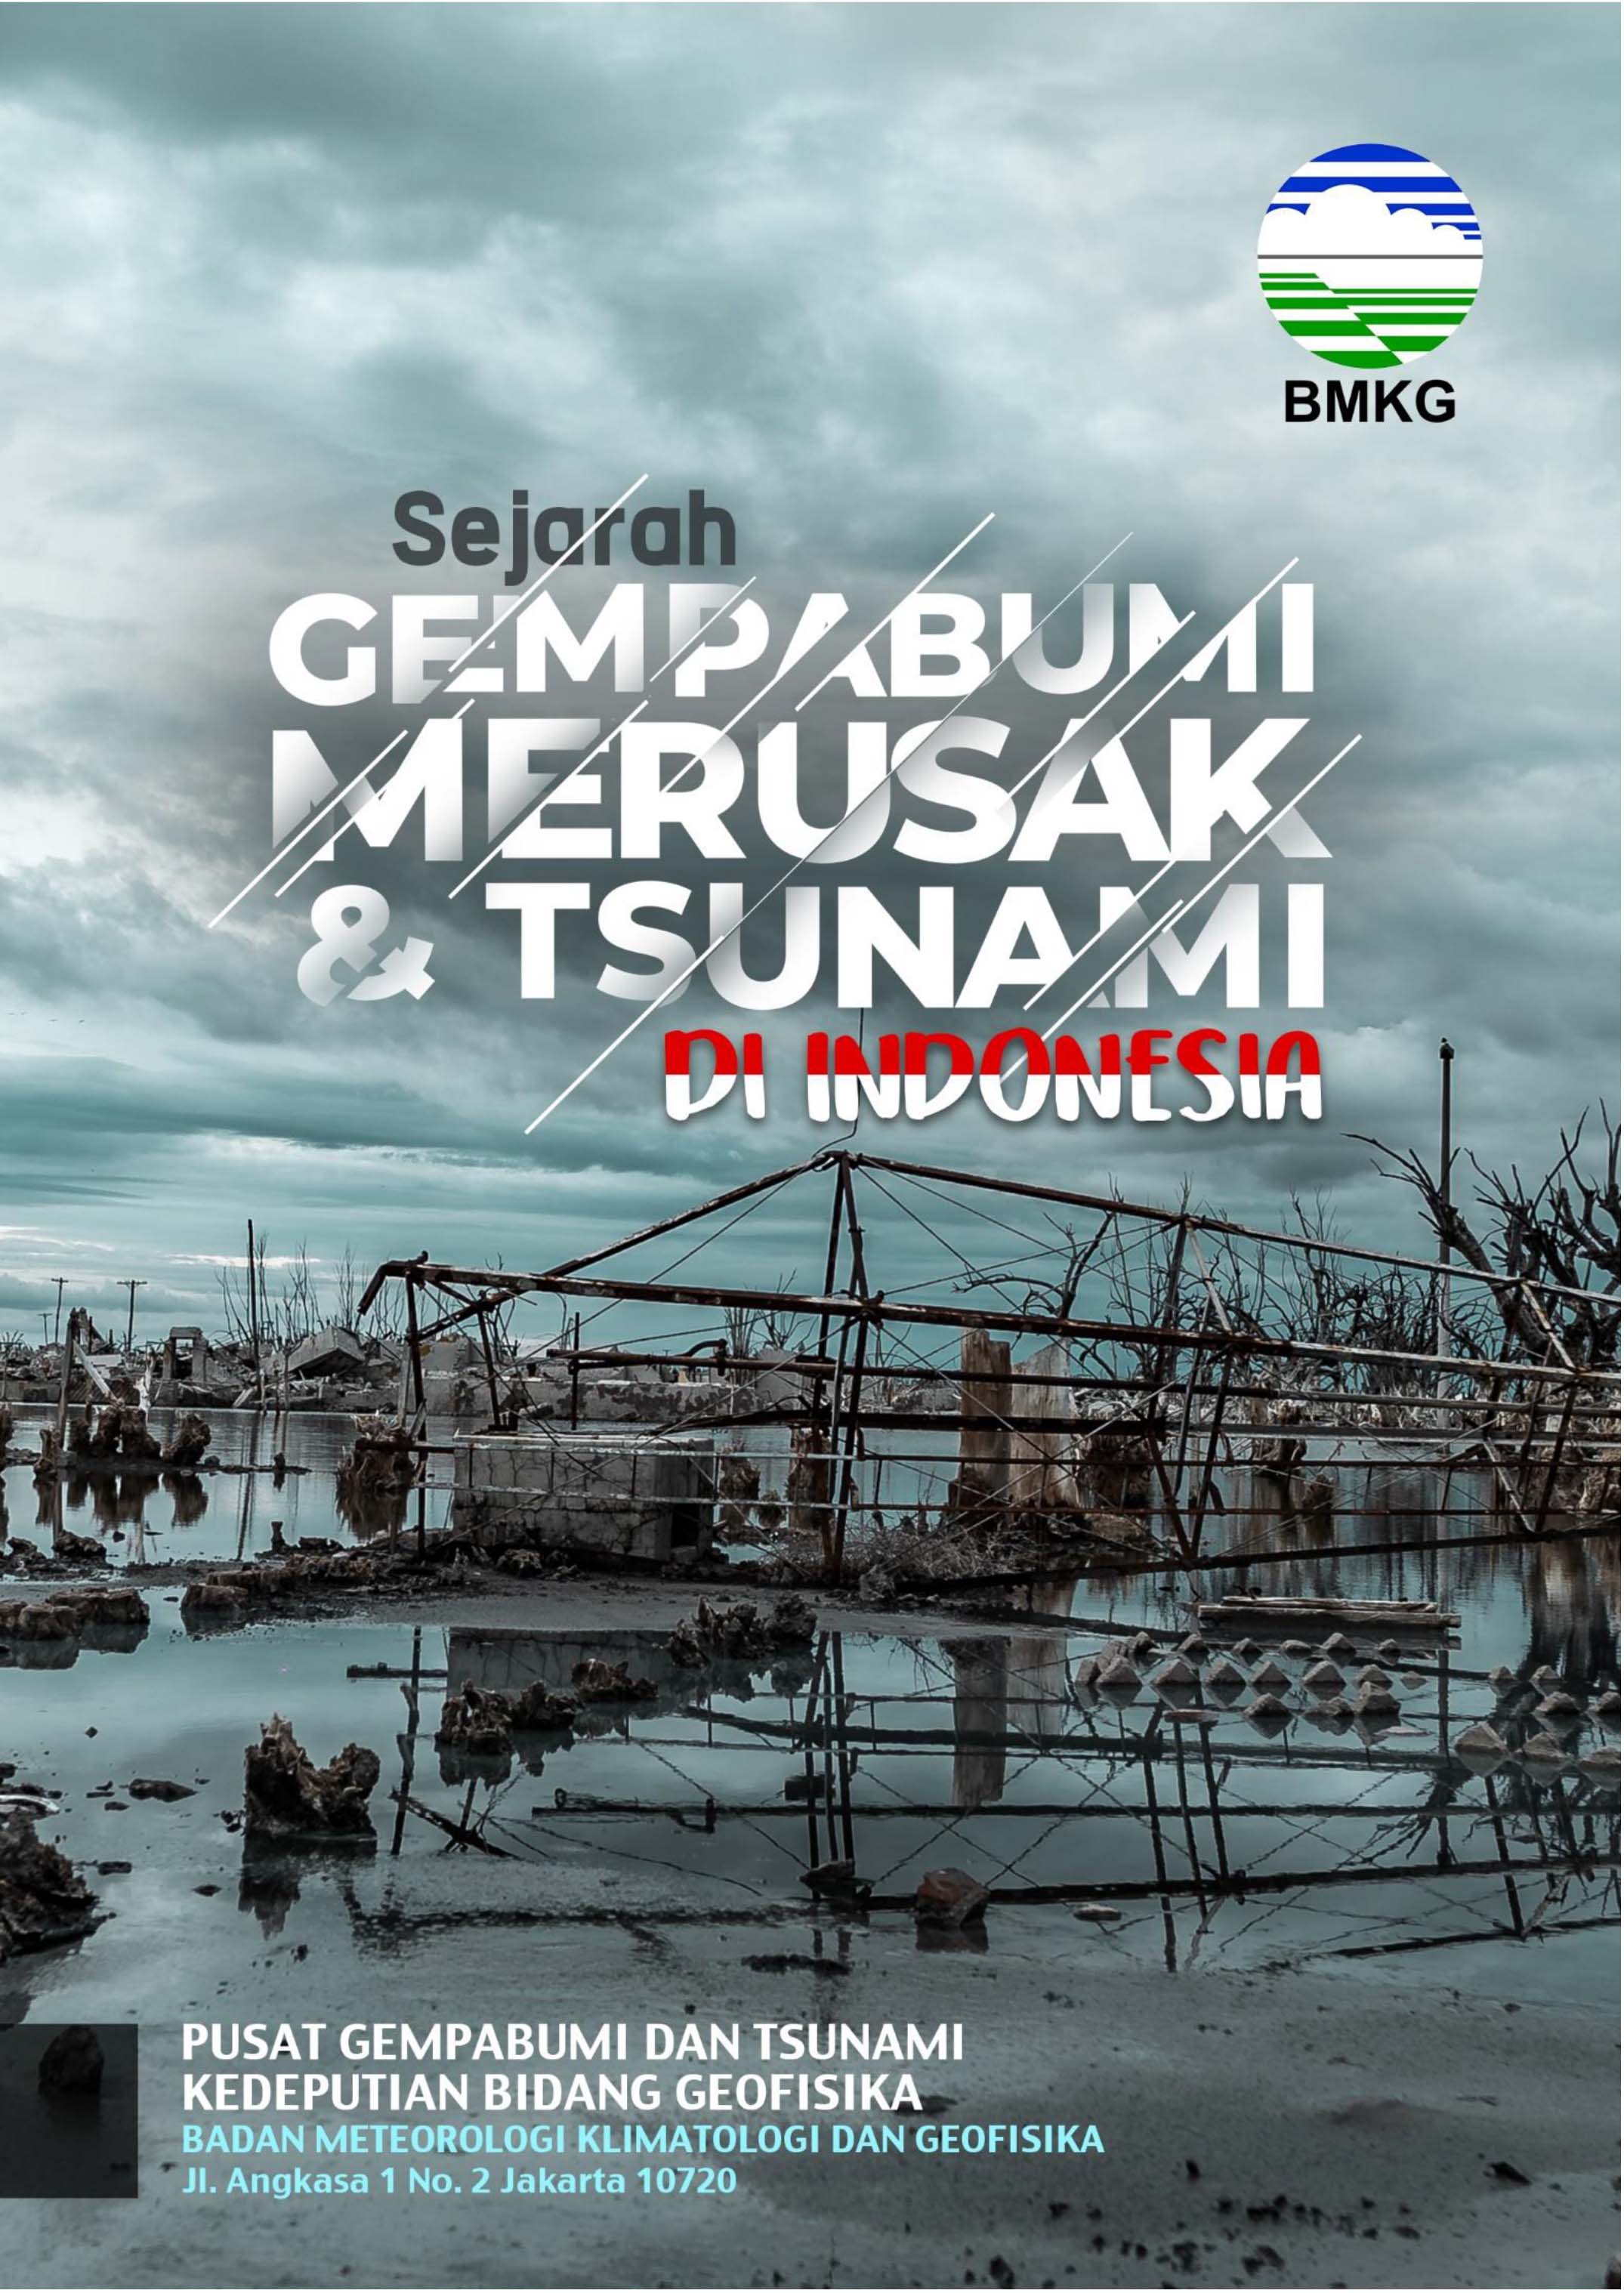 Sejarah Gempabumi Merusak di Indonesia